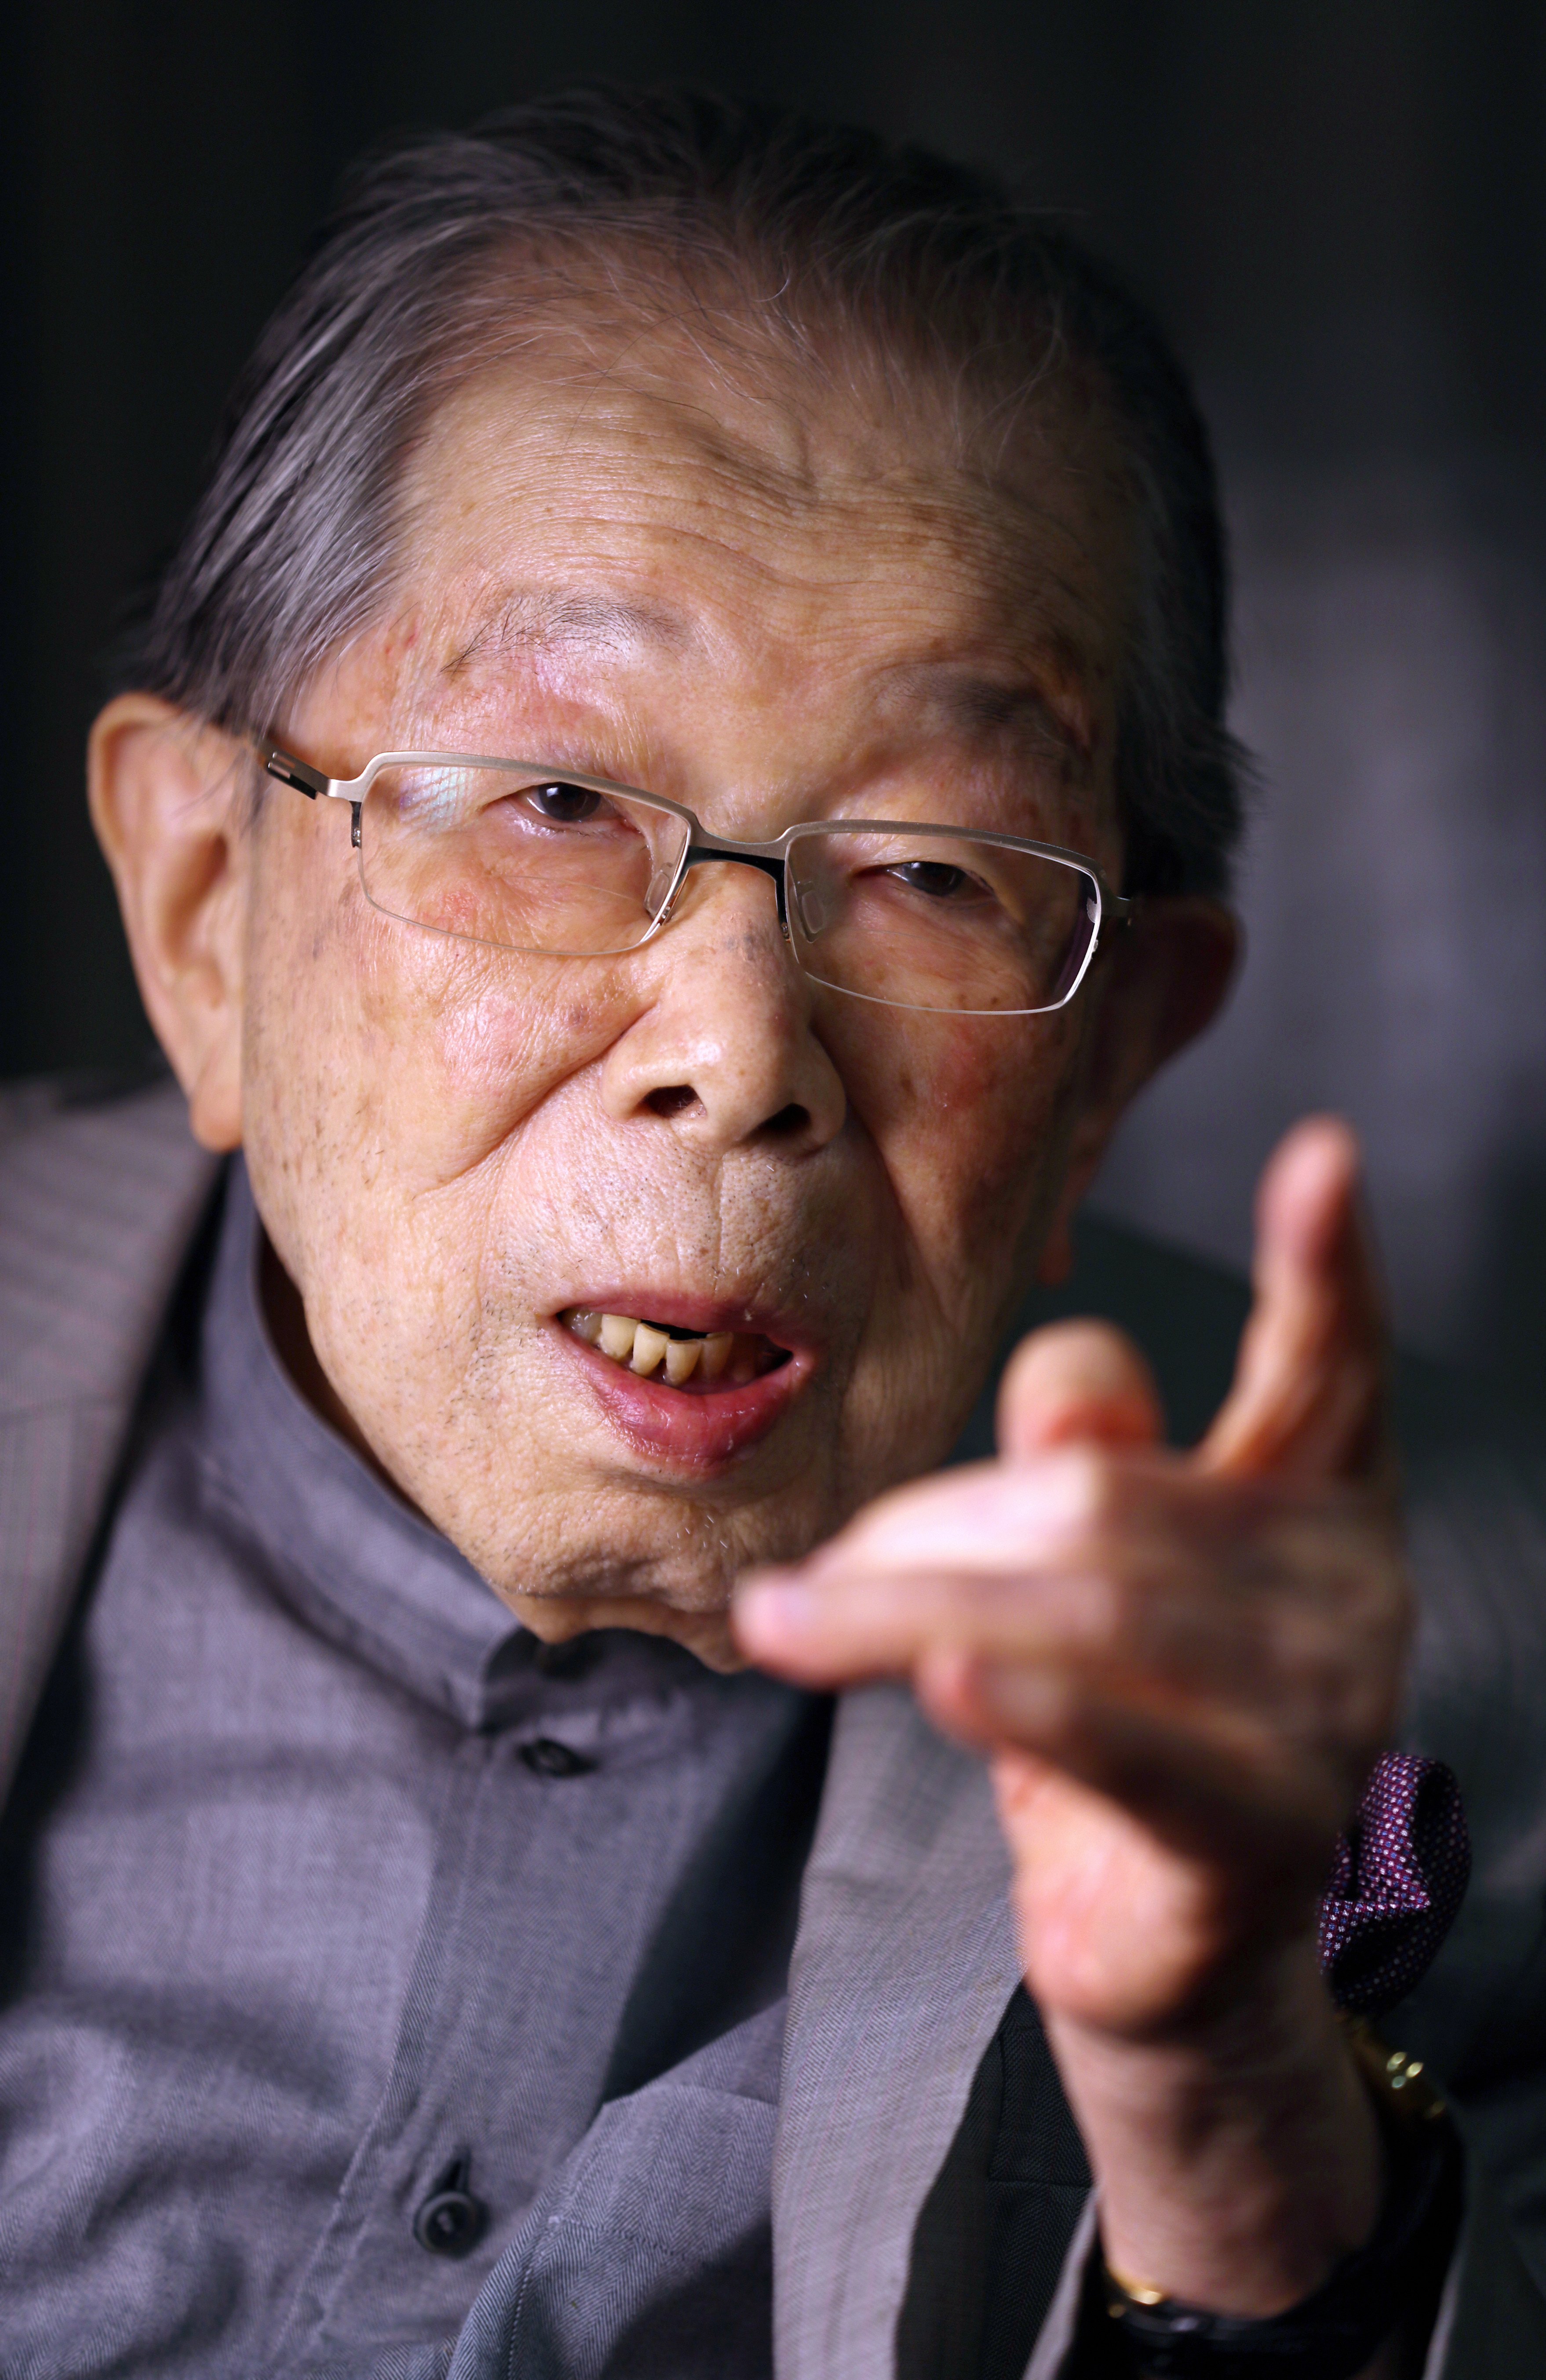 Doctor Shigeaki Hinohara at the Asahi Shimbun interview on November 1, 2010 in Tokyo, Japan. | Source: Getty Images